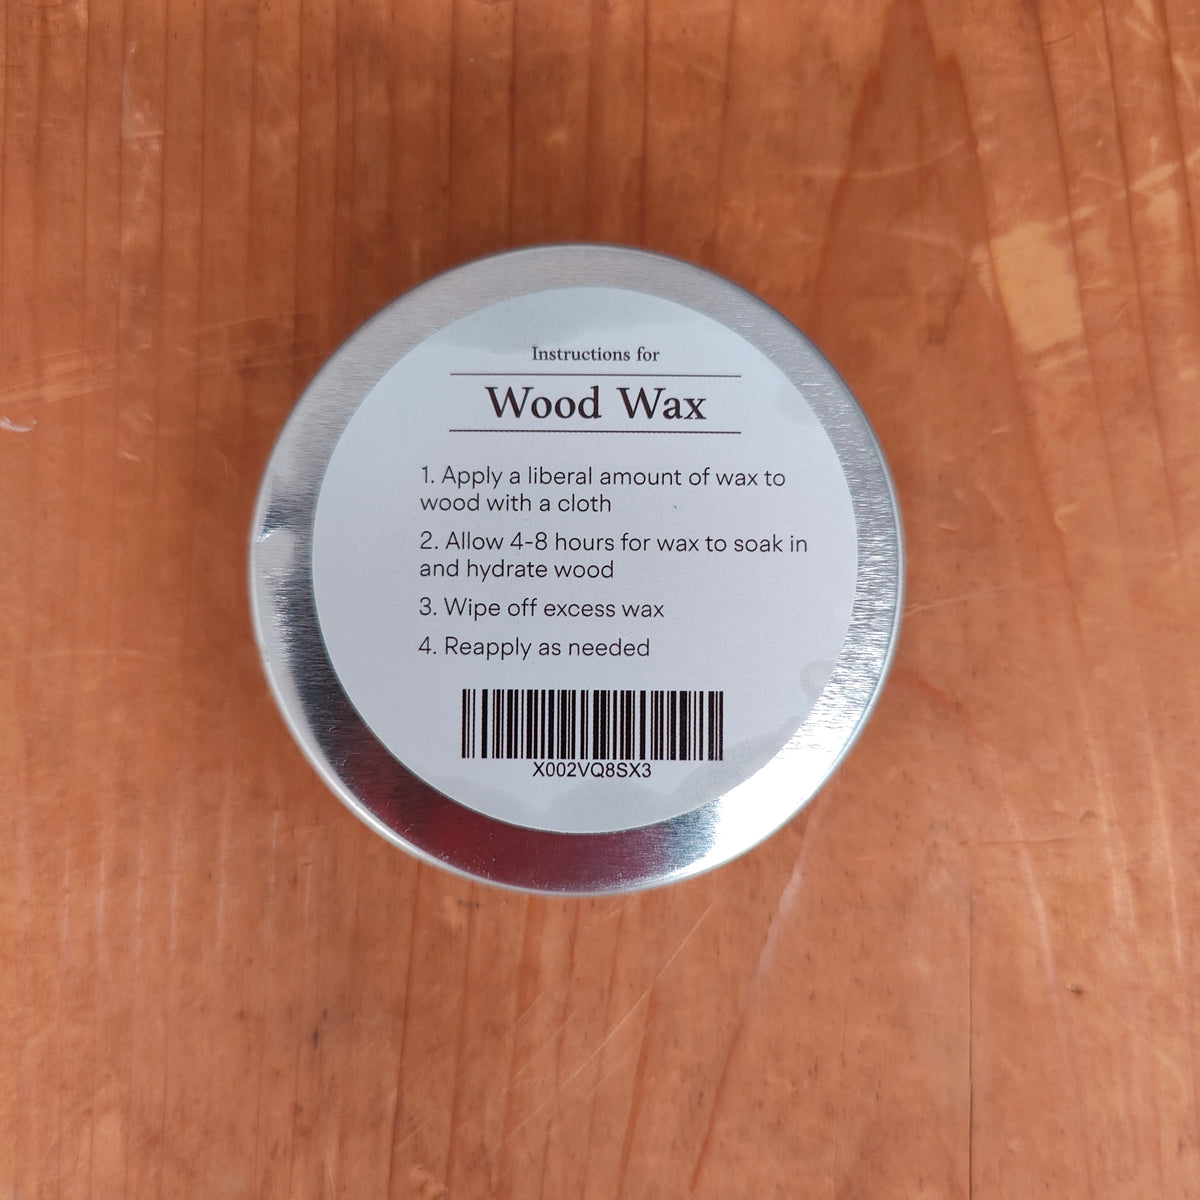 Lancaster Cast Iron Wood Wax Conditioner – Bernal Cutlery